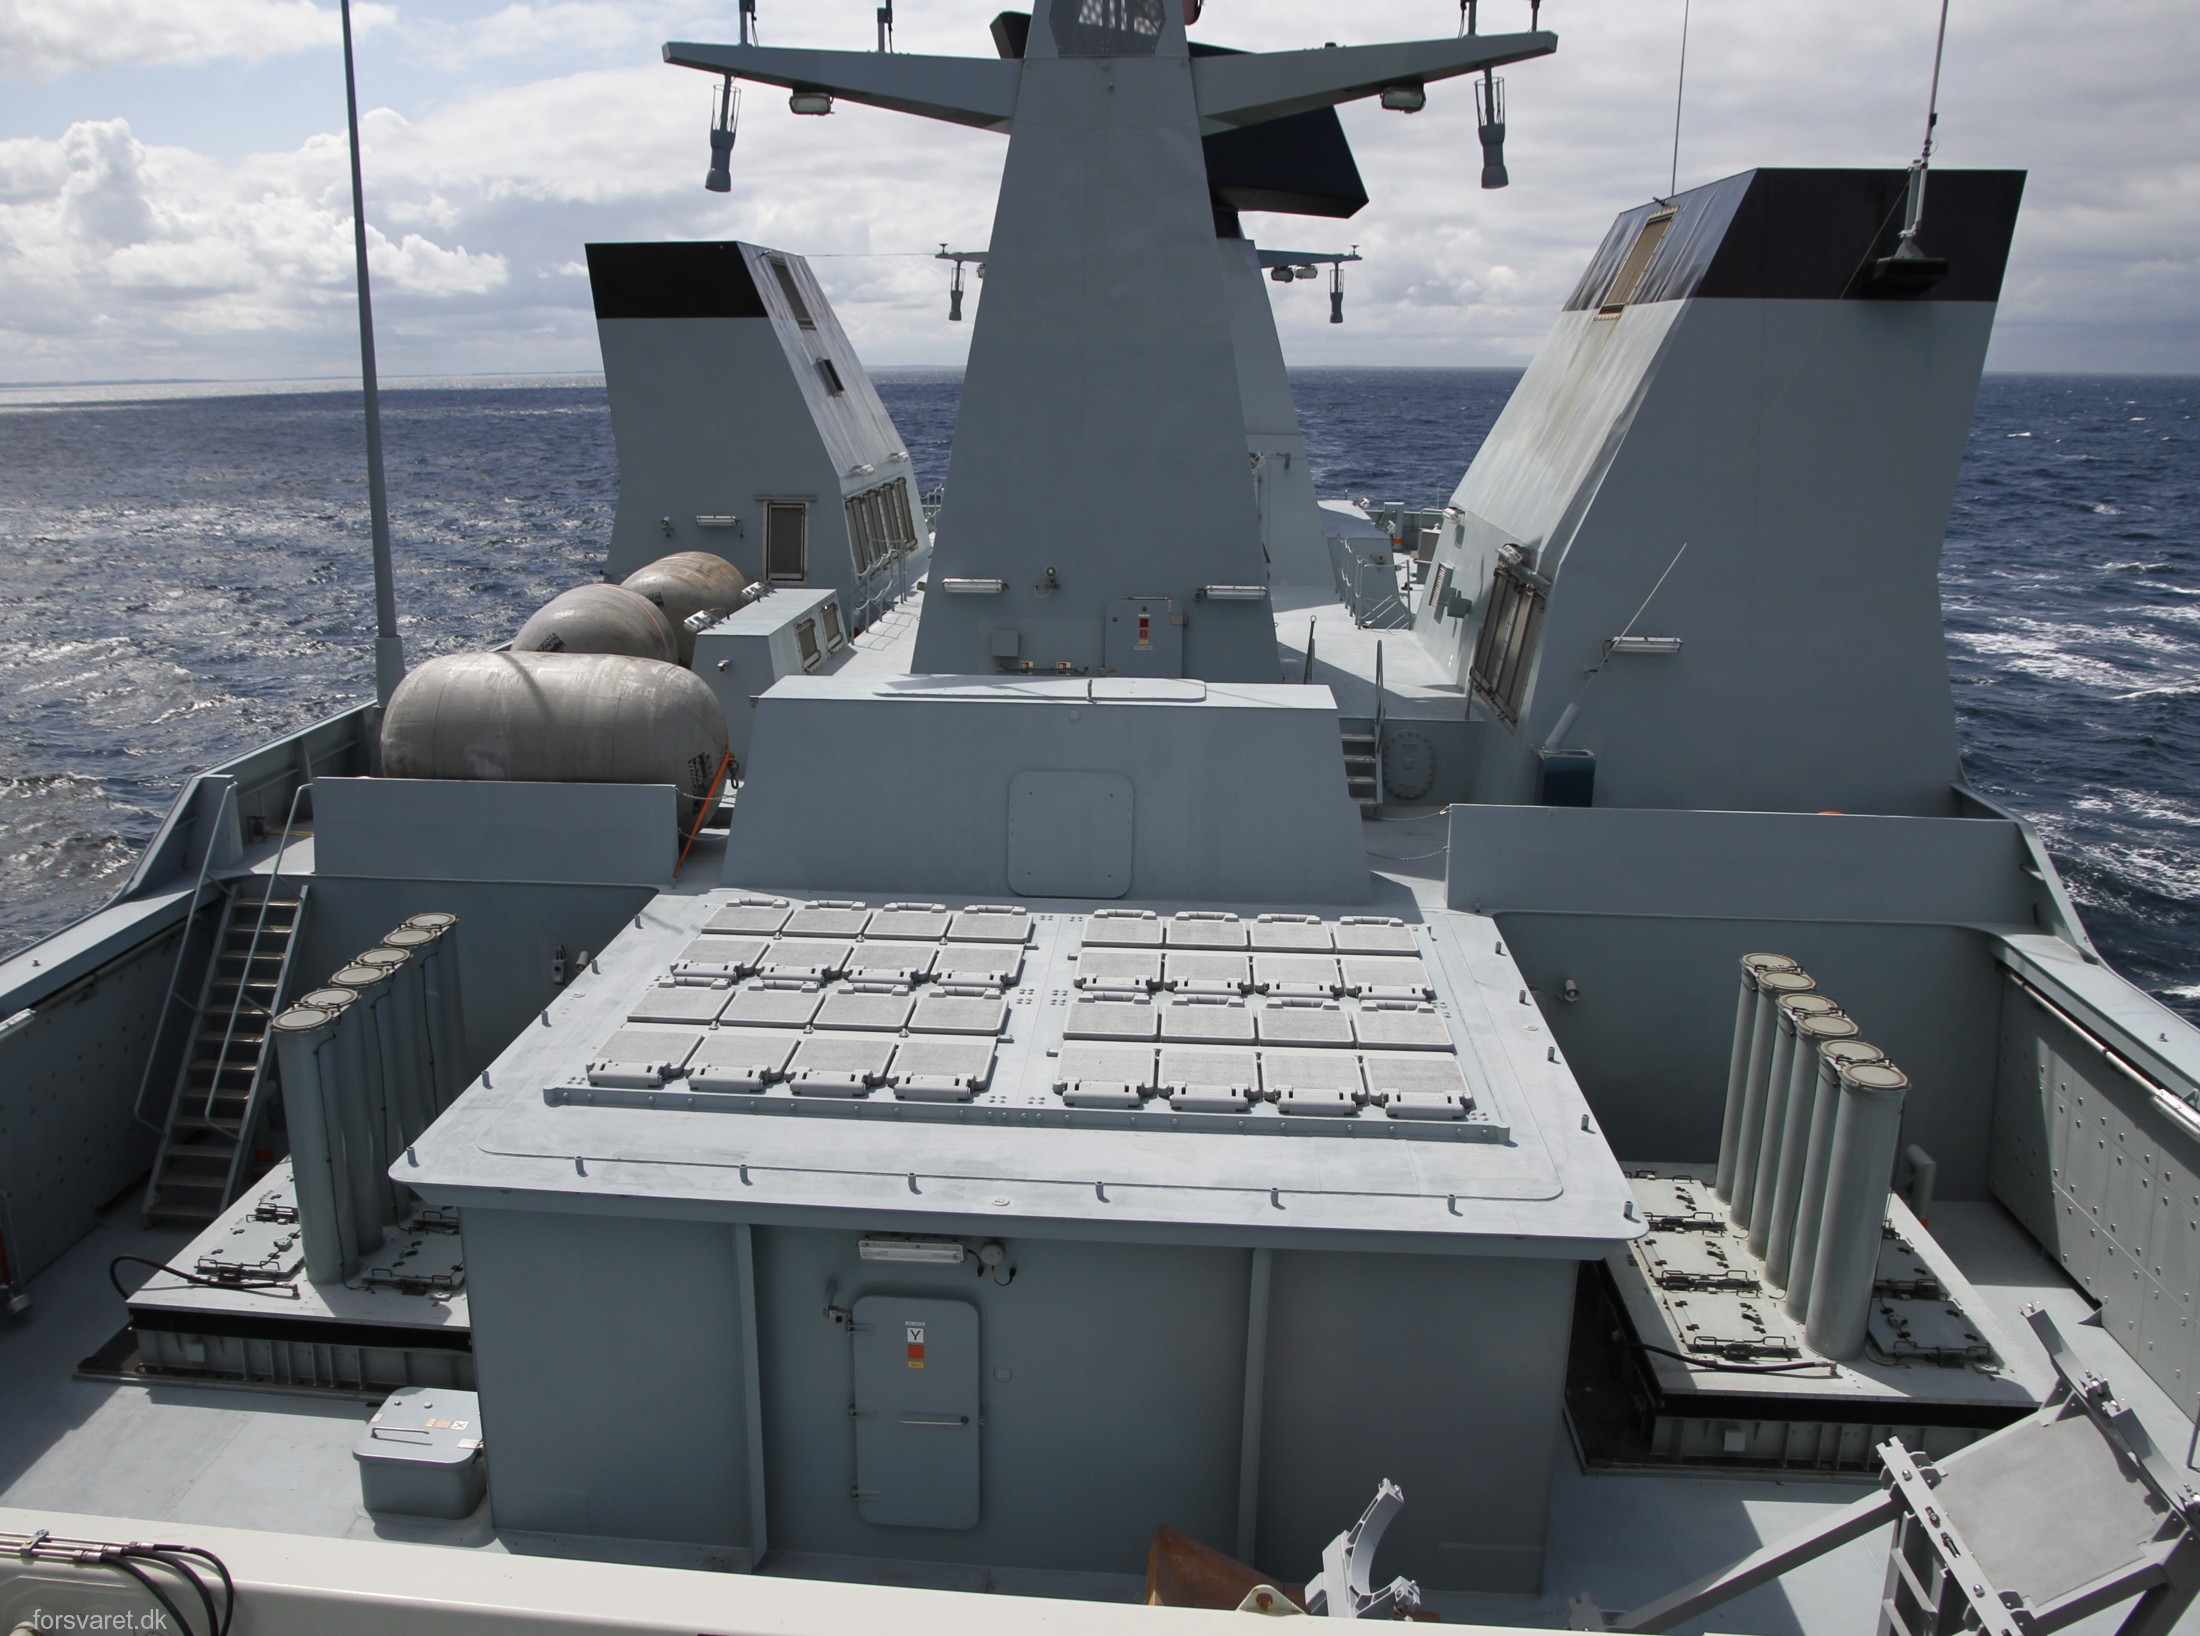 f-362 hdms peter willemoes iver huitfeldt class guided missile frigate ffg royal danish navy 67 mk. 41 veretical launching system vls rim-66 standard sm-2mr sam